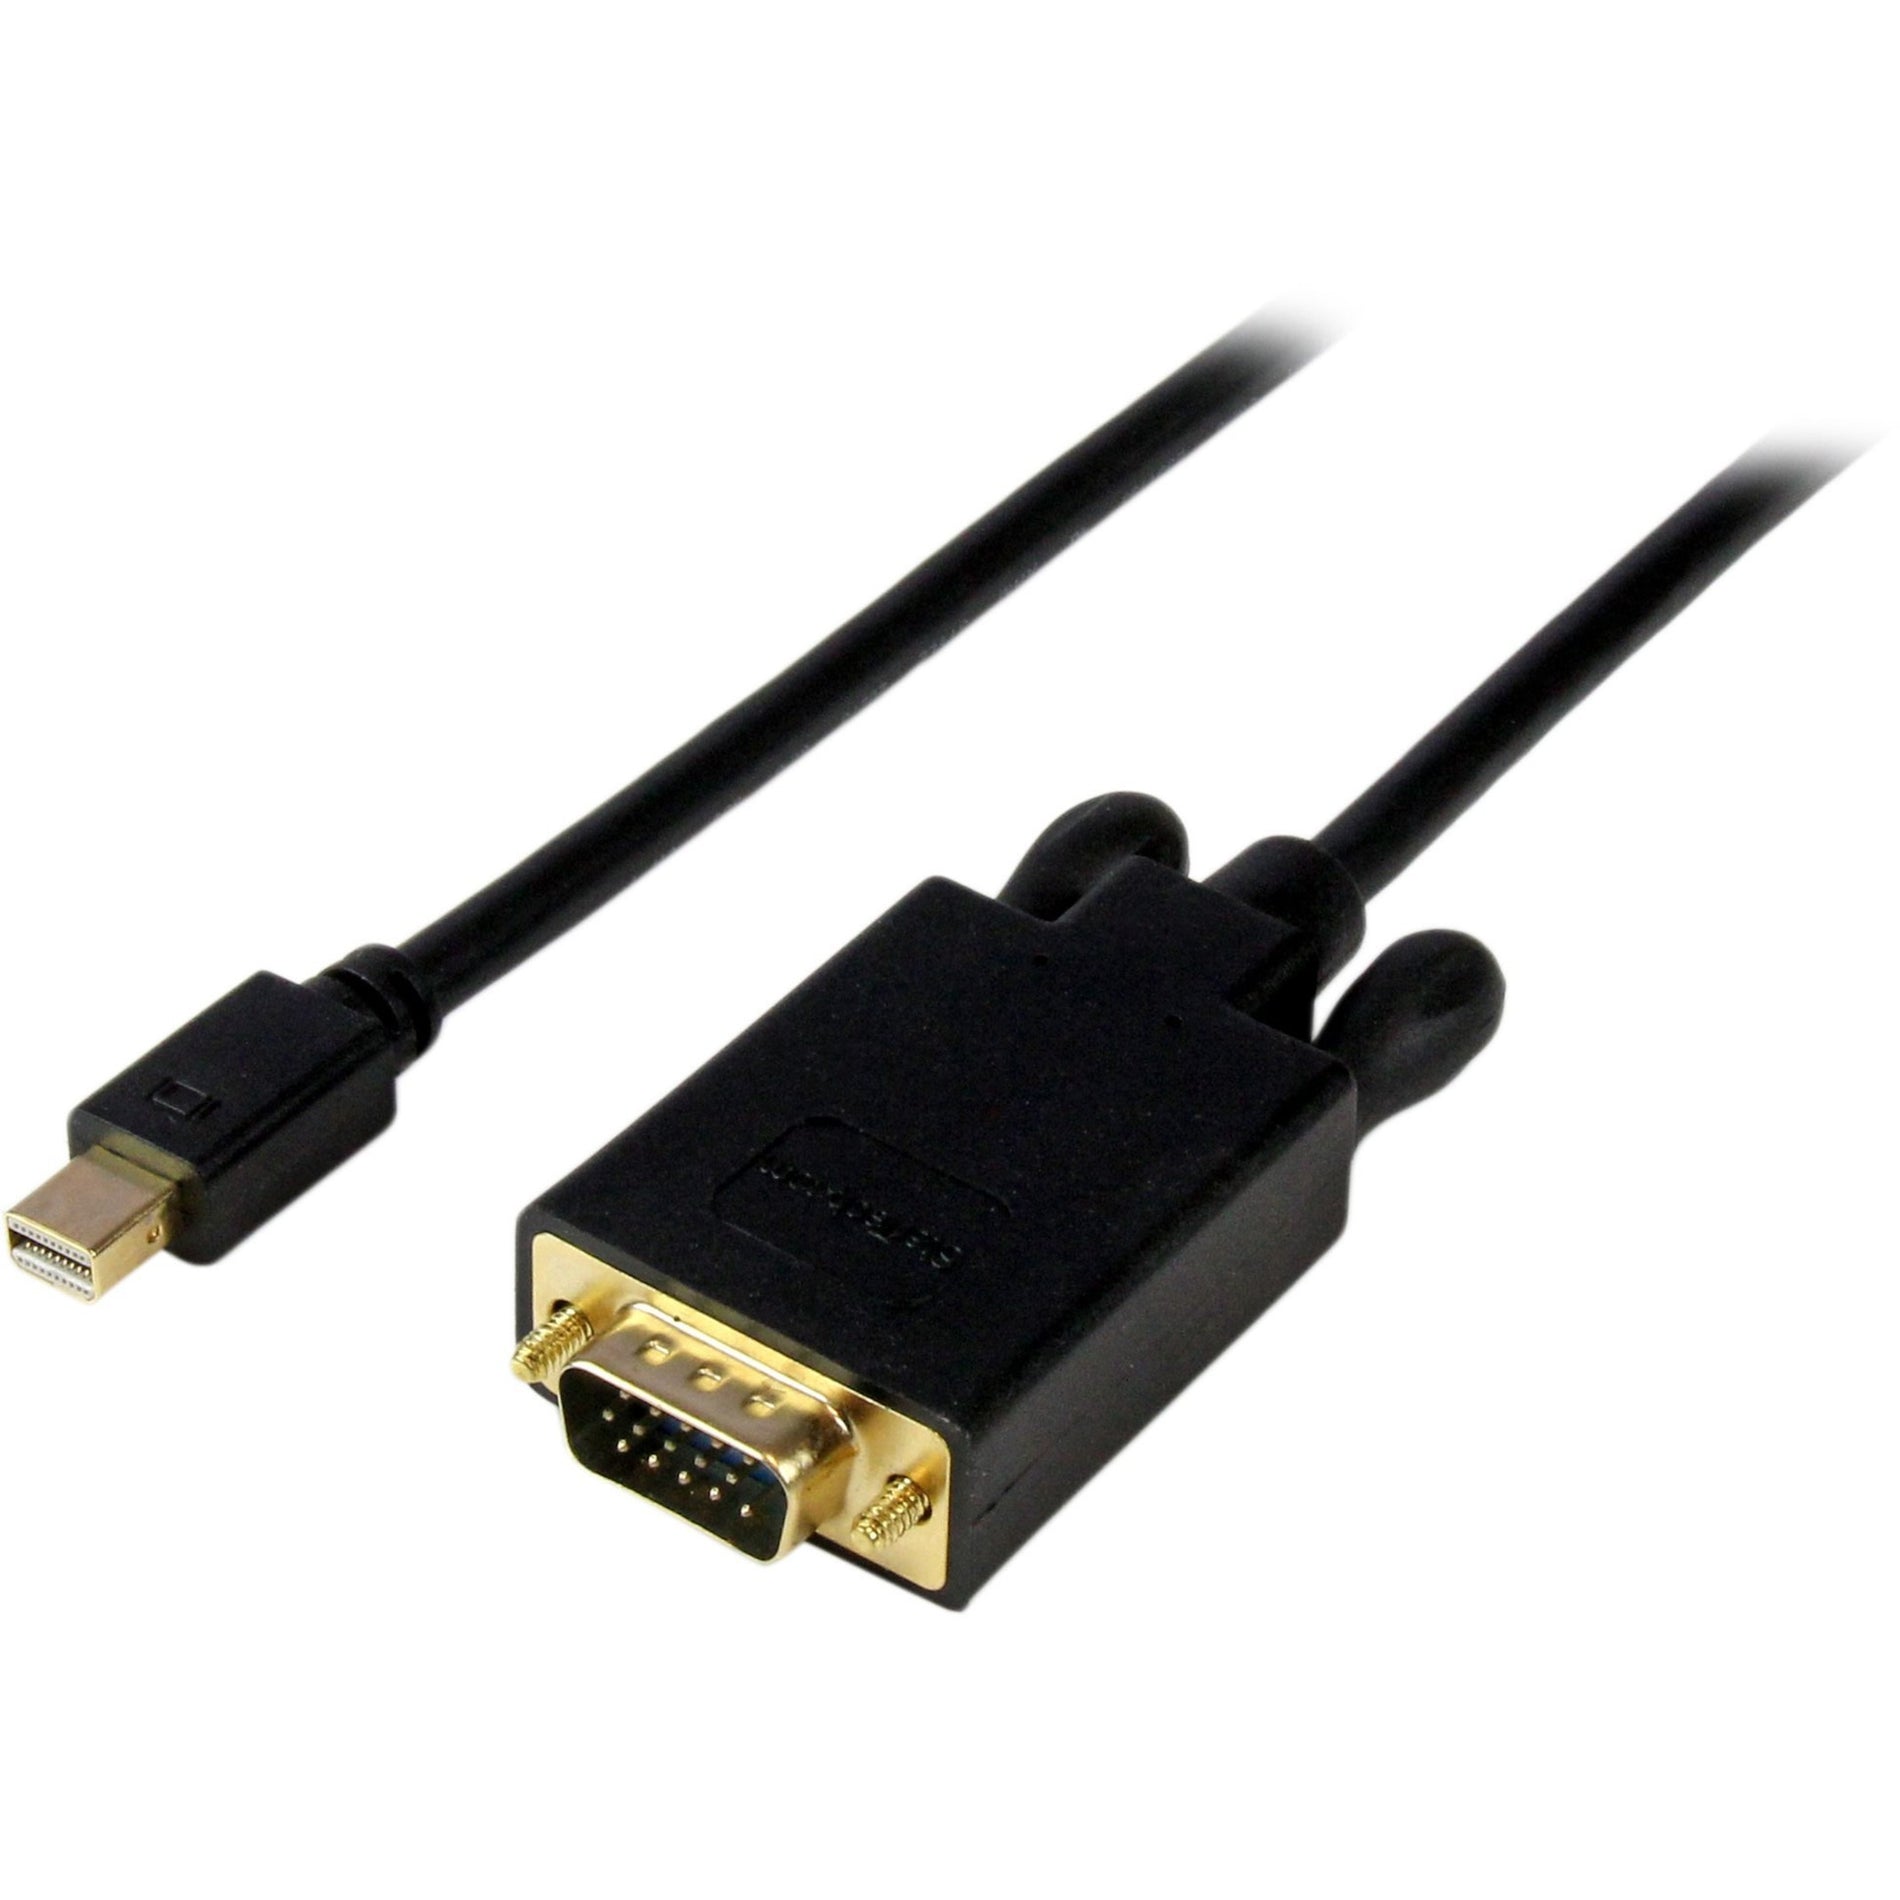 StarTech.com MDP2VGAMM10B Mini DisplayPort to VGA Adapter Cable - Black, 10 ft, 1920x1200